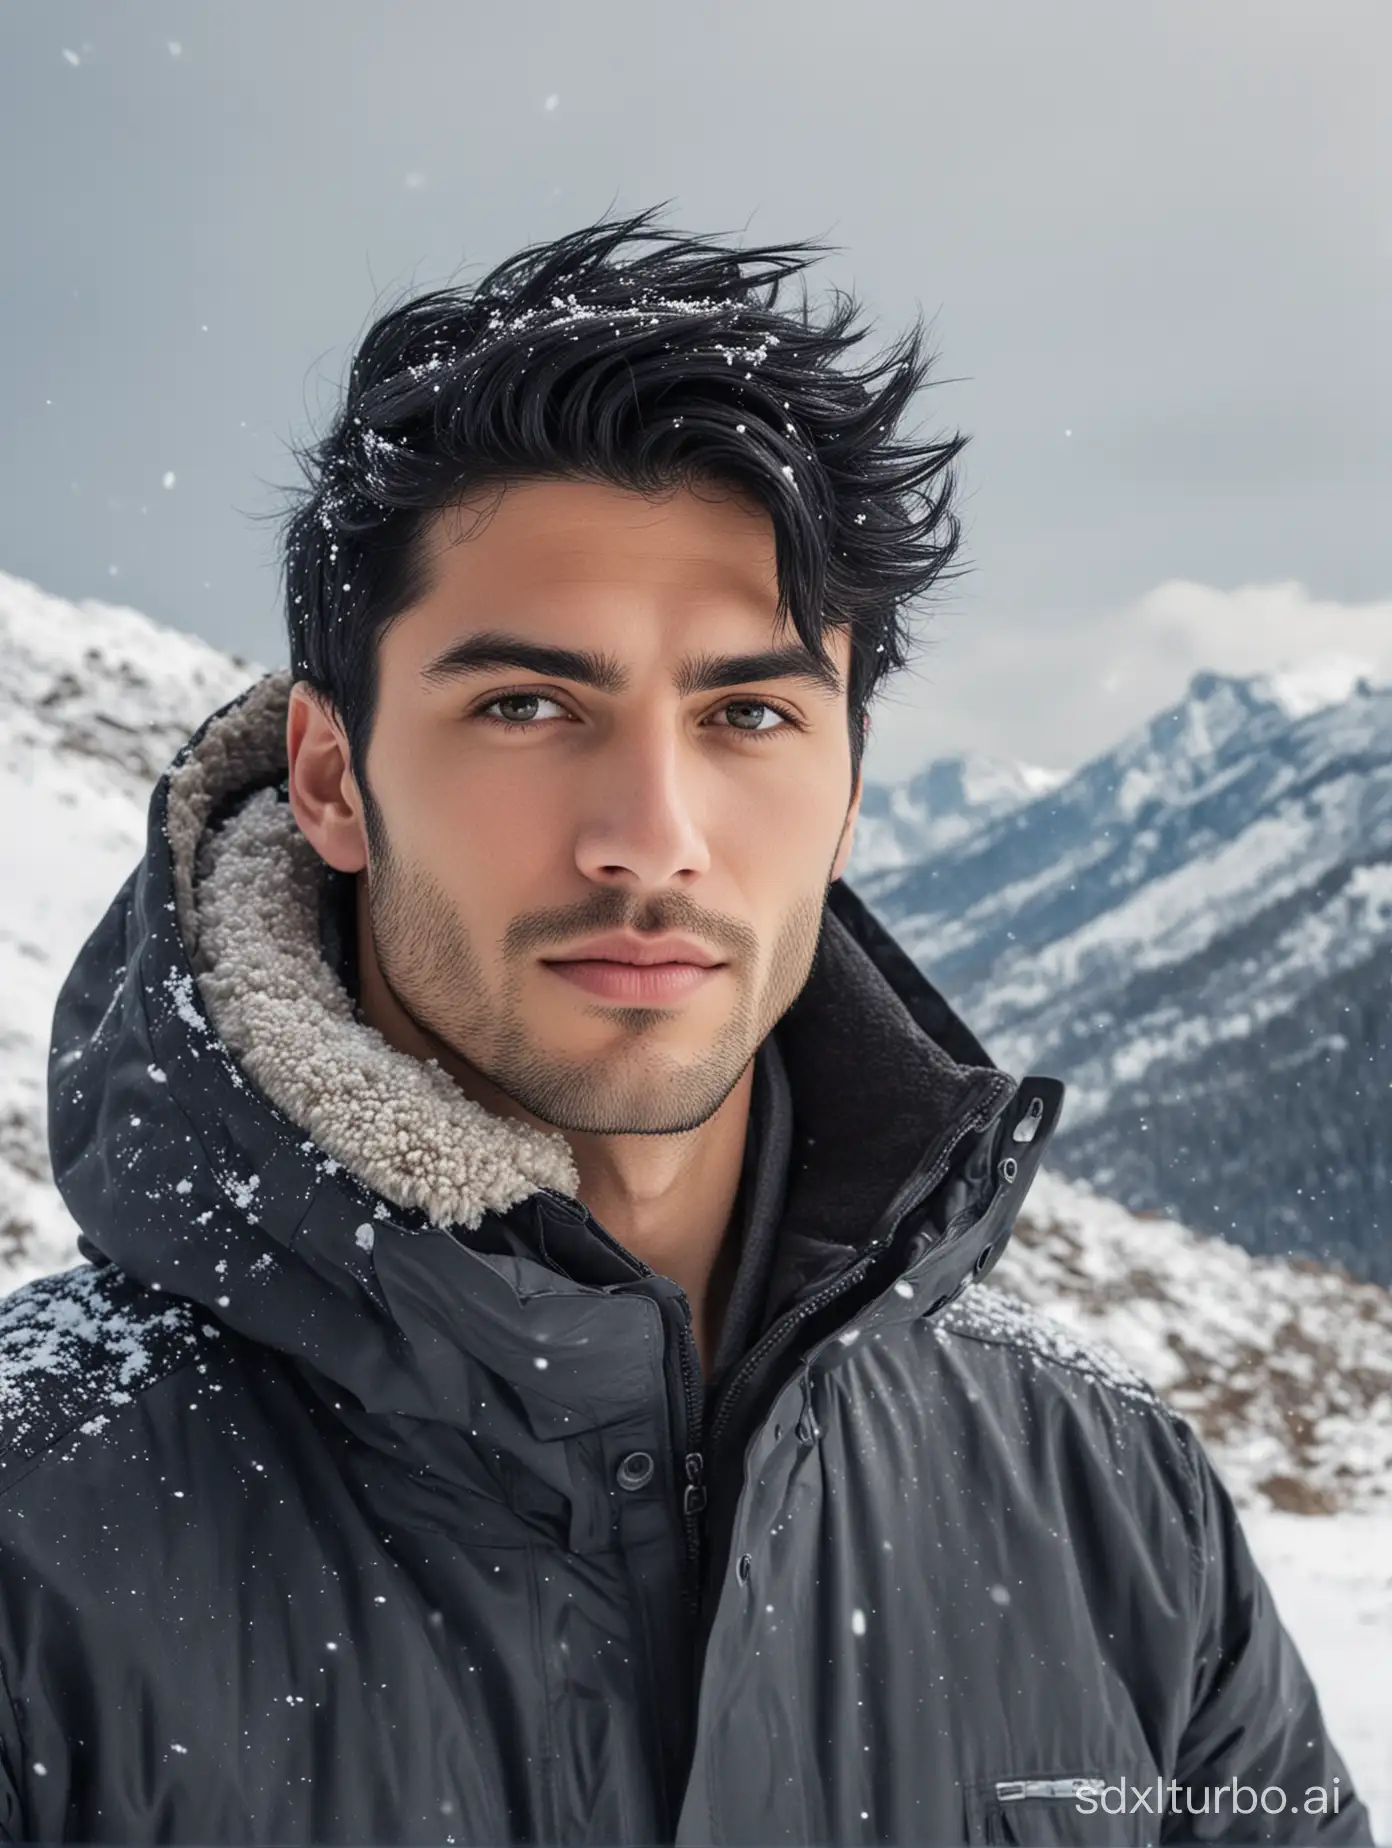 black hair man
Fotomodel on mountain in snow